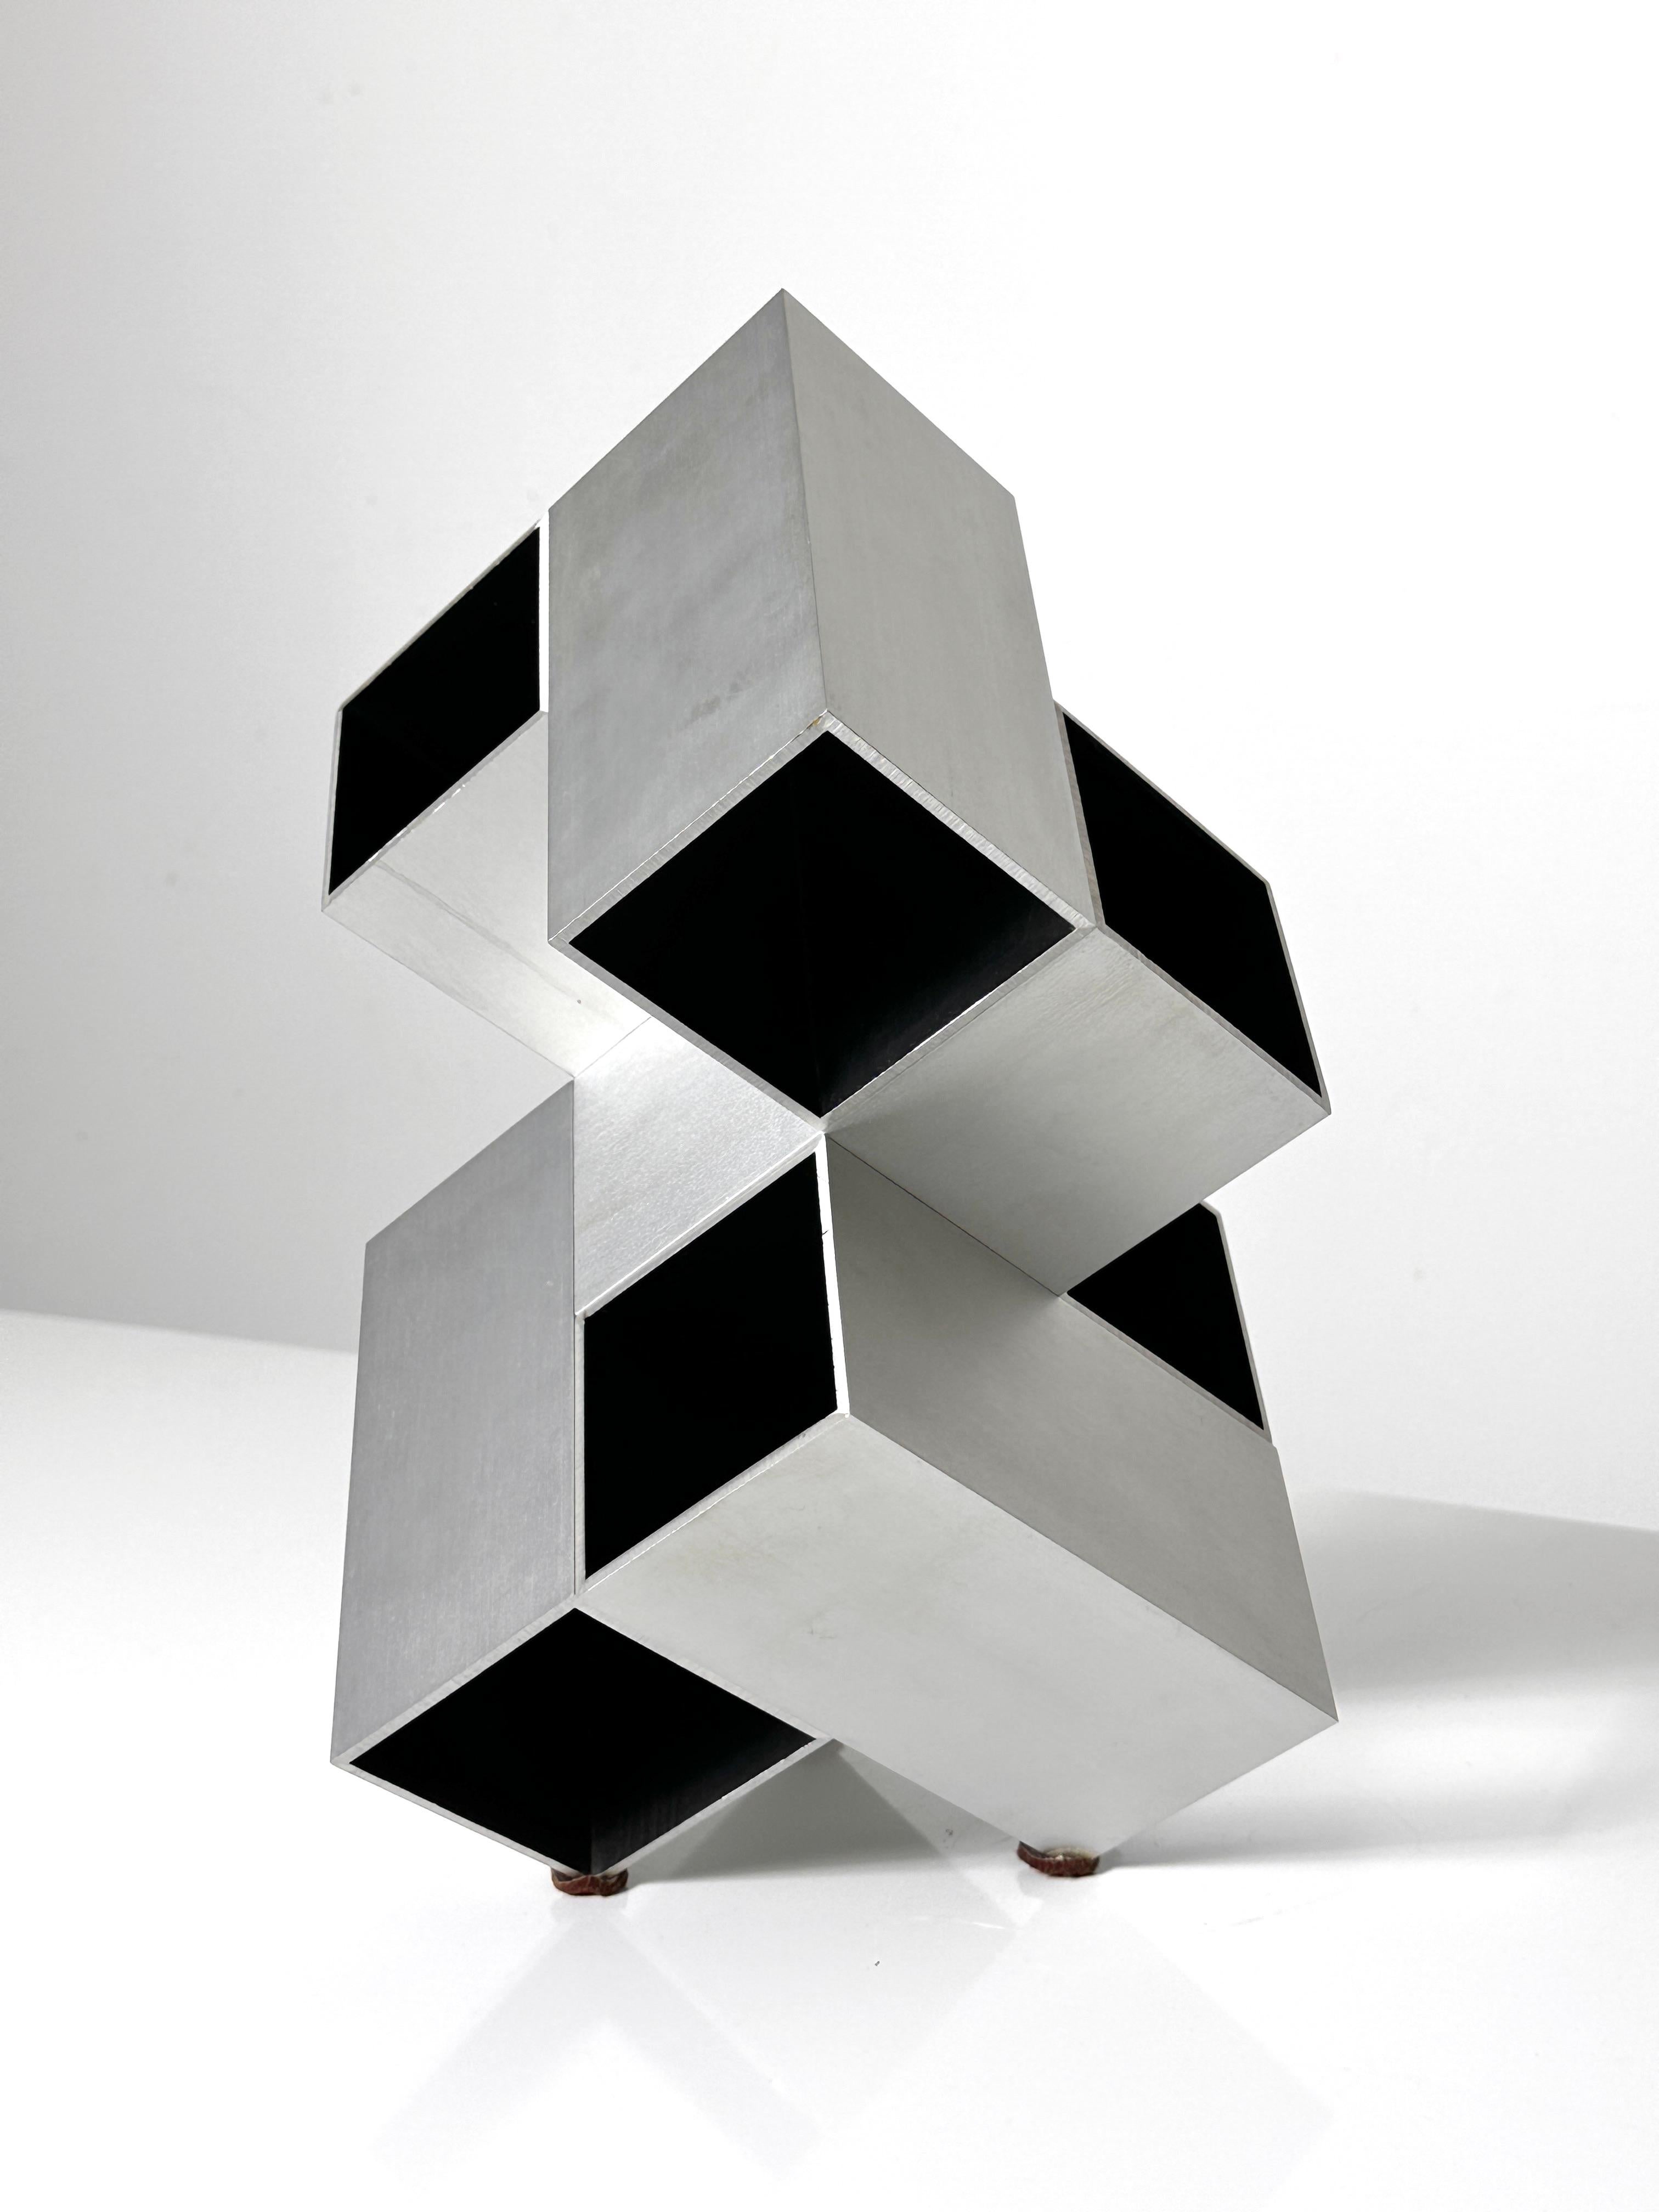 Abstract Modern Modular Aluminum Op Art Cube Sculpture by Kosso Eloul 1970s For Sale 1